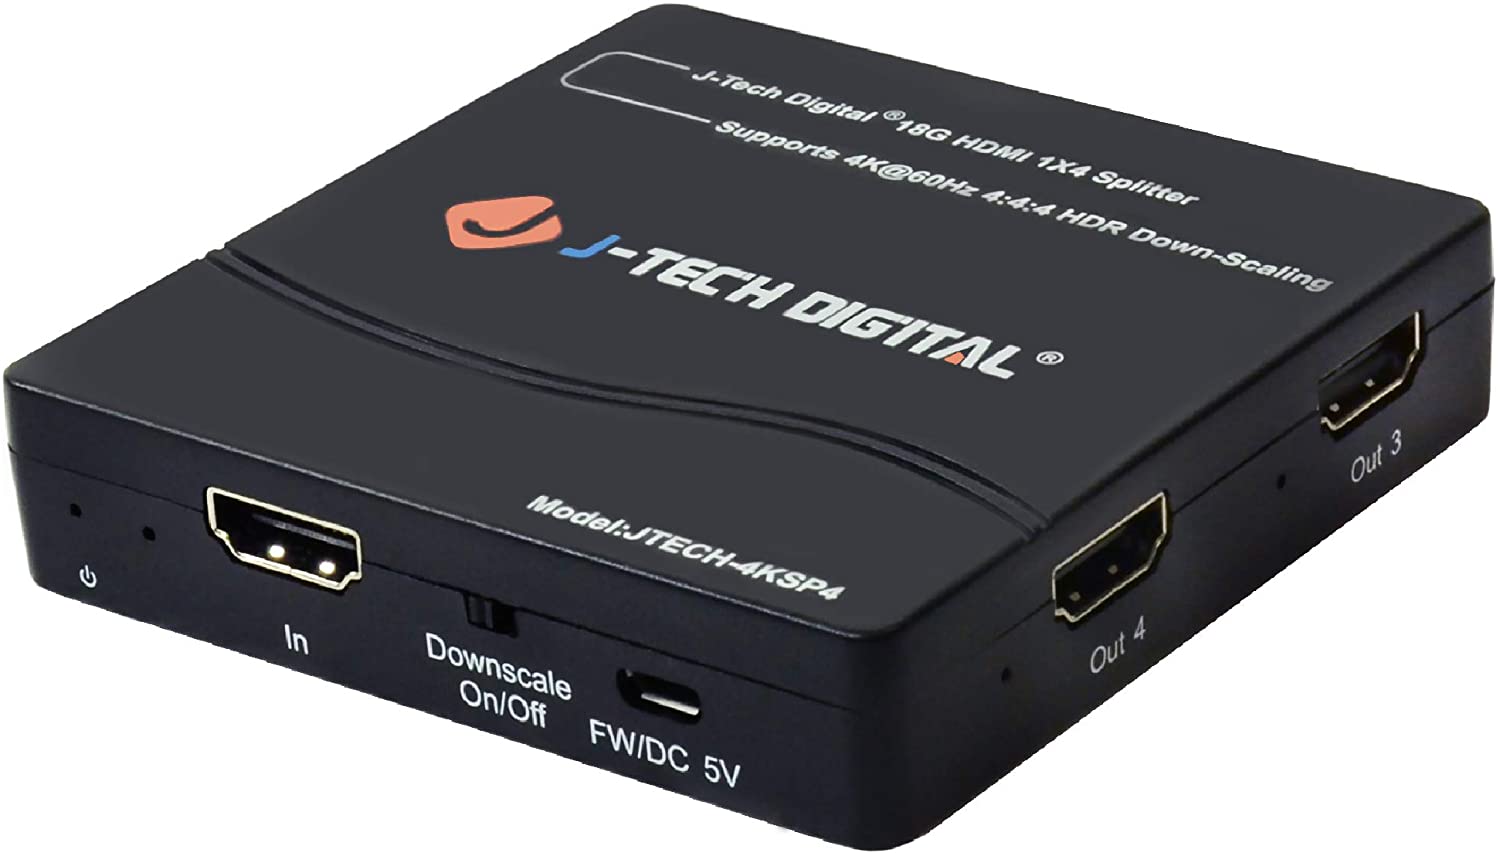 Græder Addition reform HDMI Splitter Supporting 1X4 Multi-Resolution Output - J-Tech Digital